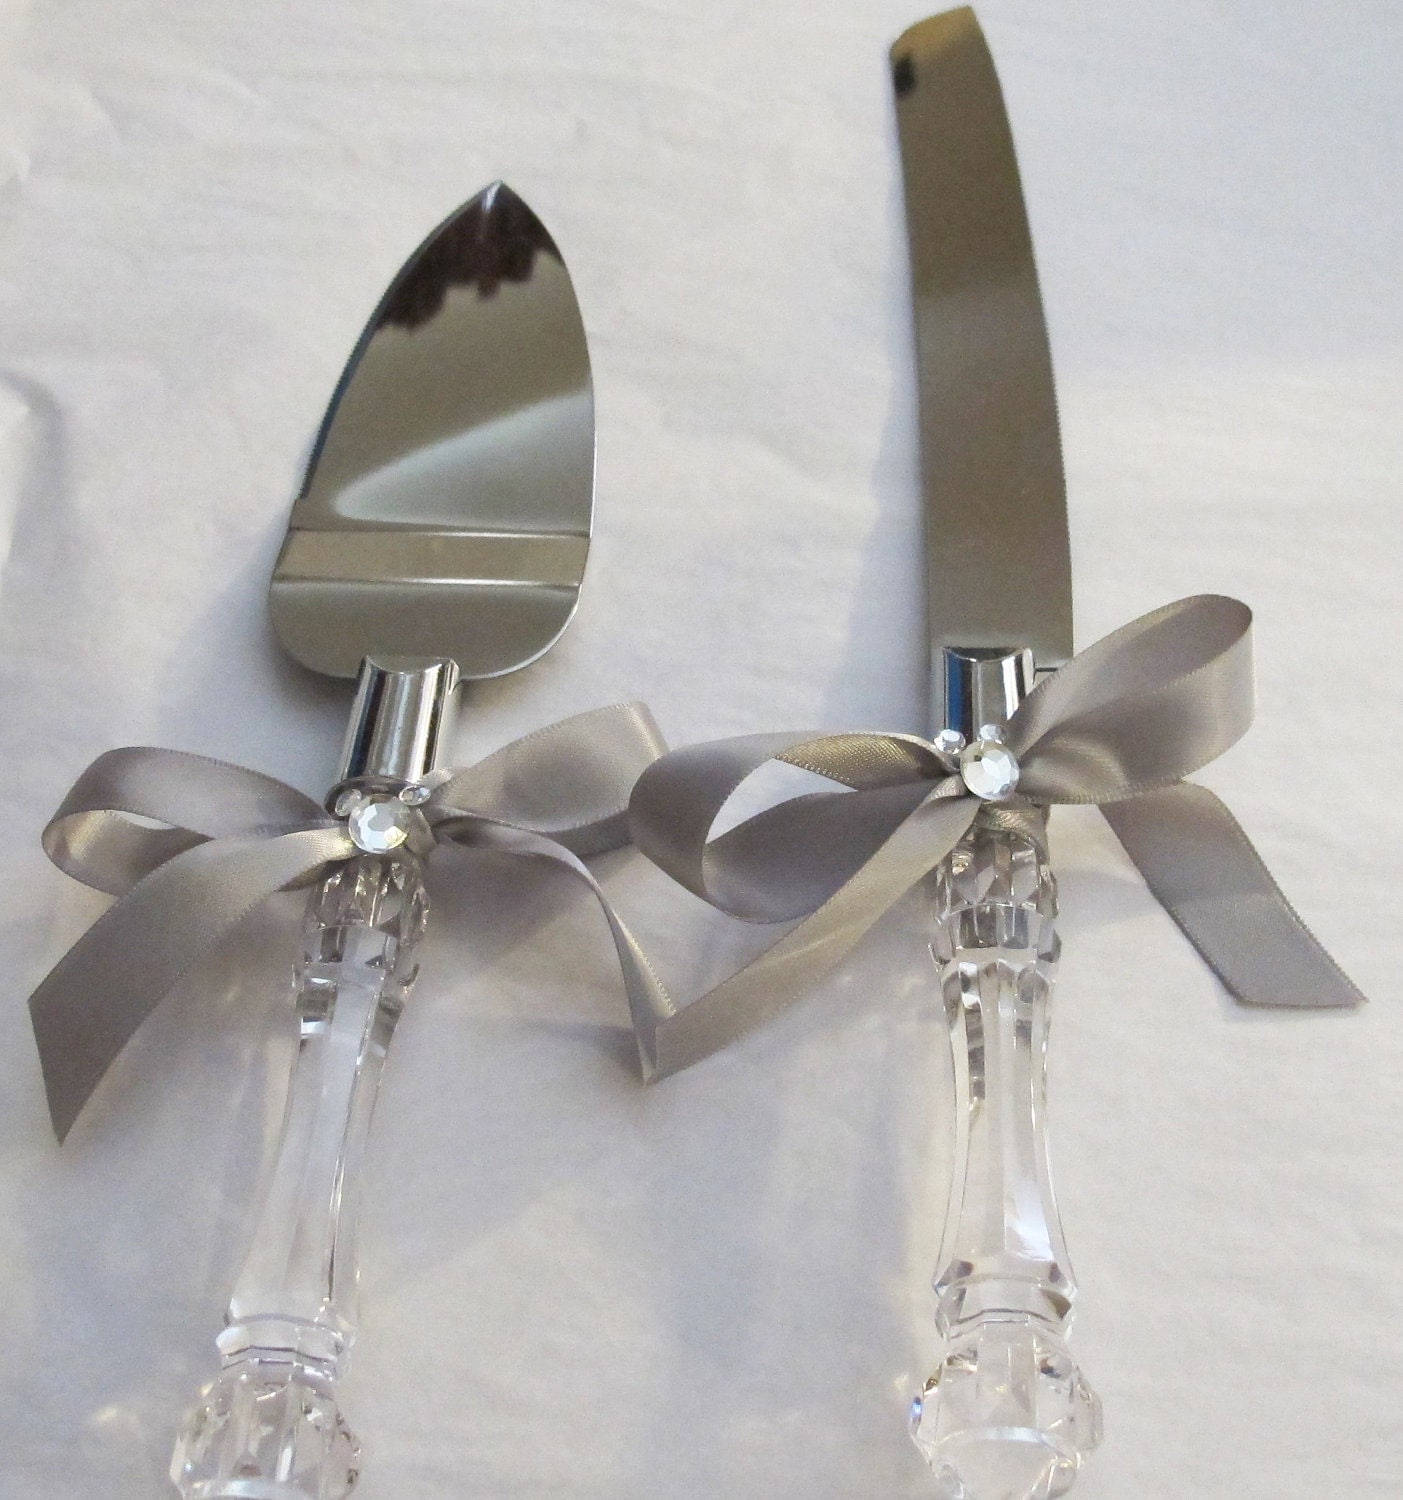  Disney  Wedding  Cake  and Knife  Serving Set  with Satin Ribbon